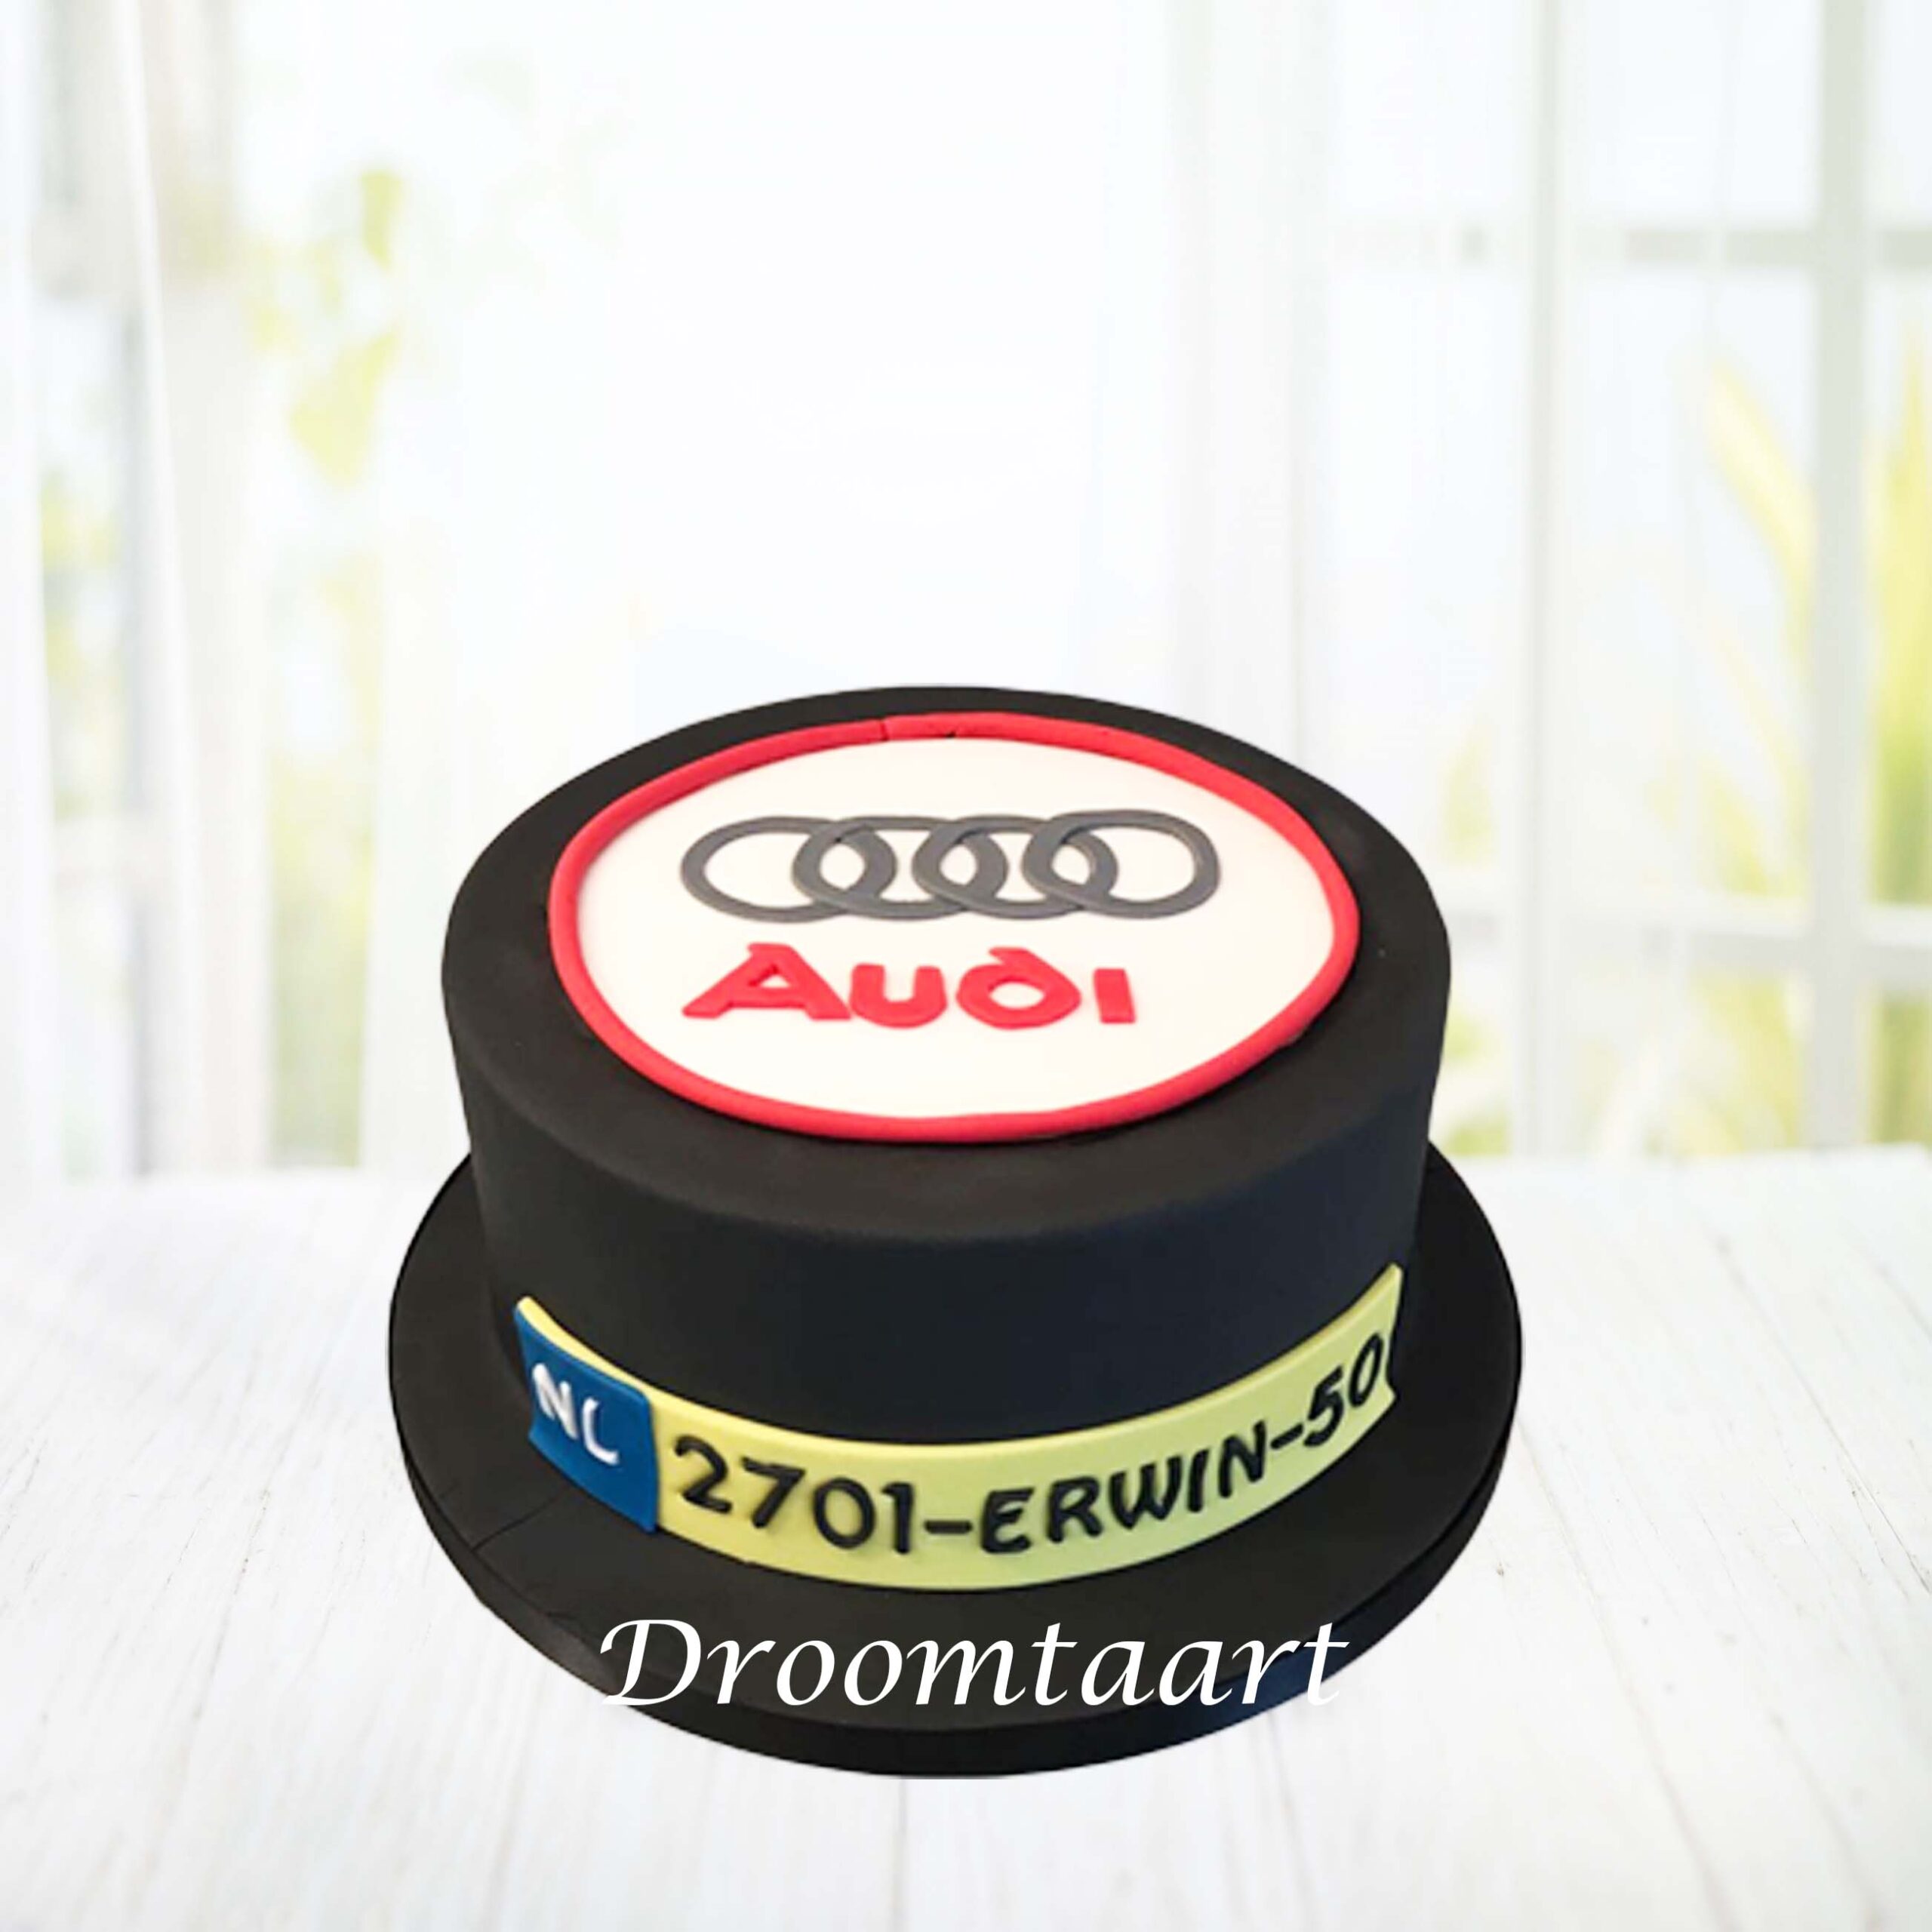 Dusver Echt elleboog Auto logo taart Audi - Droomtaart